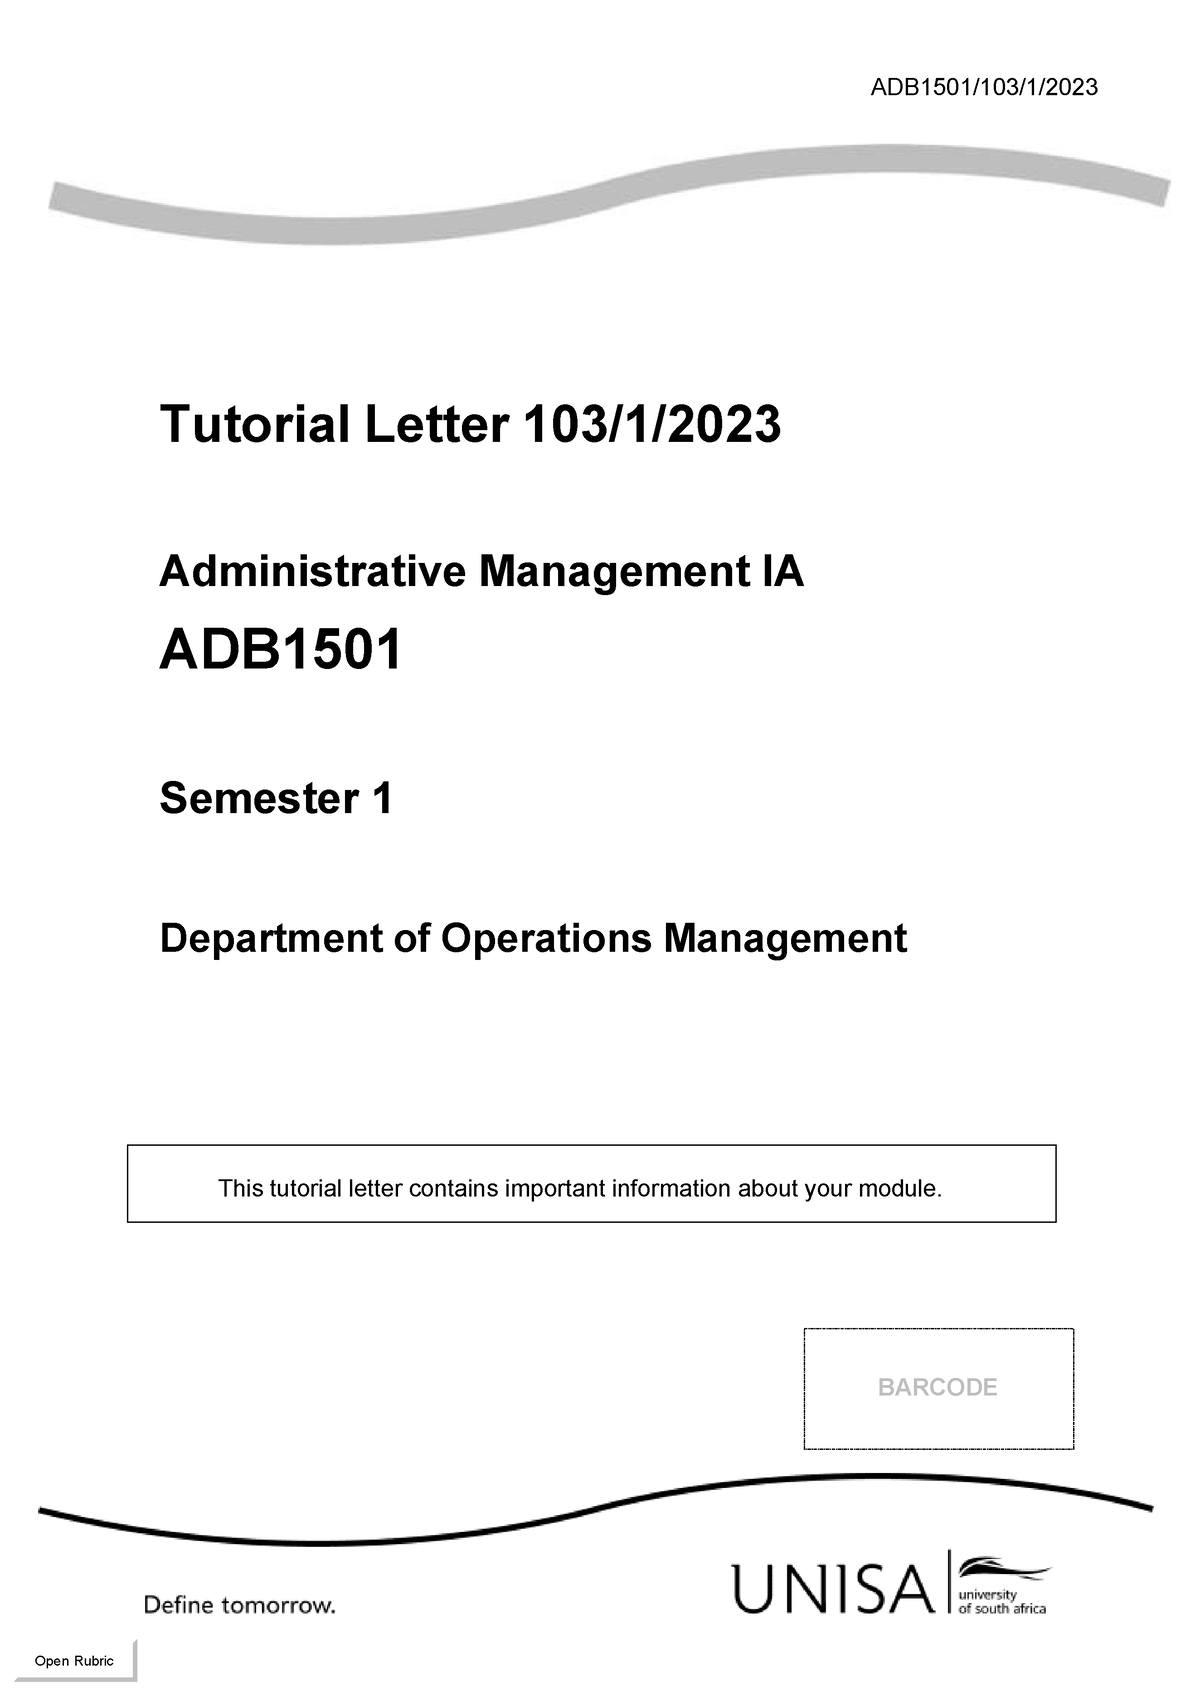 adb1501 assignment 6 answers